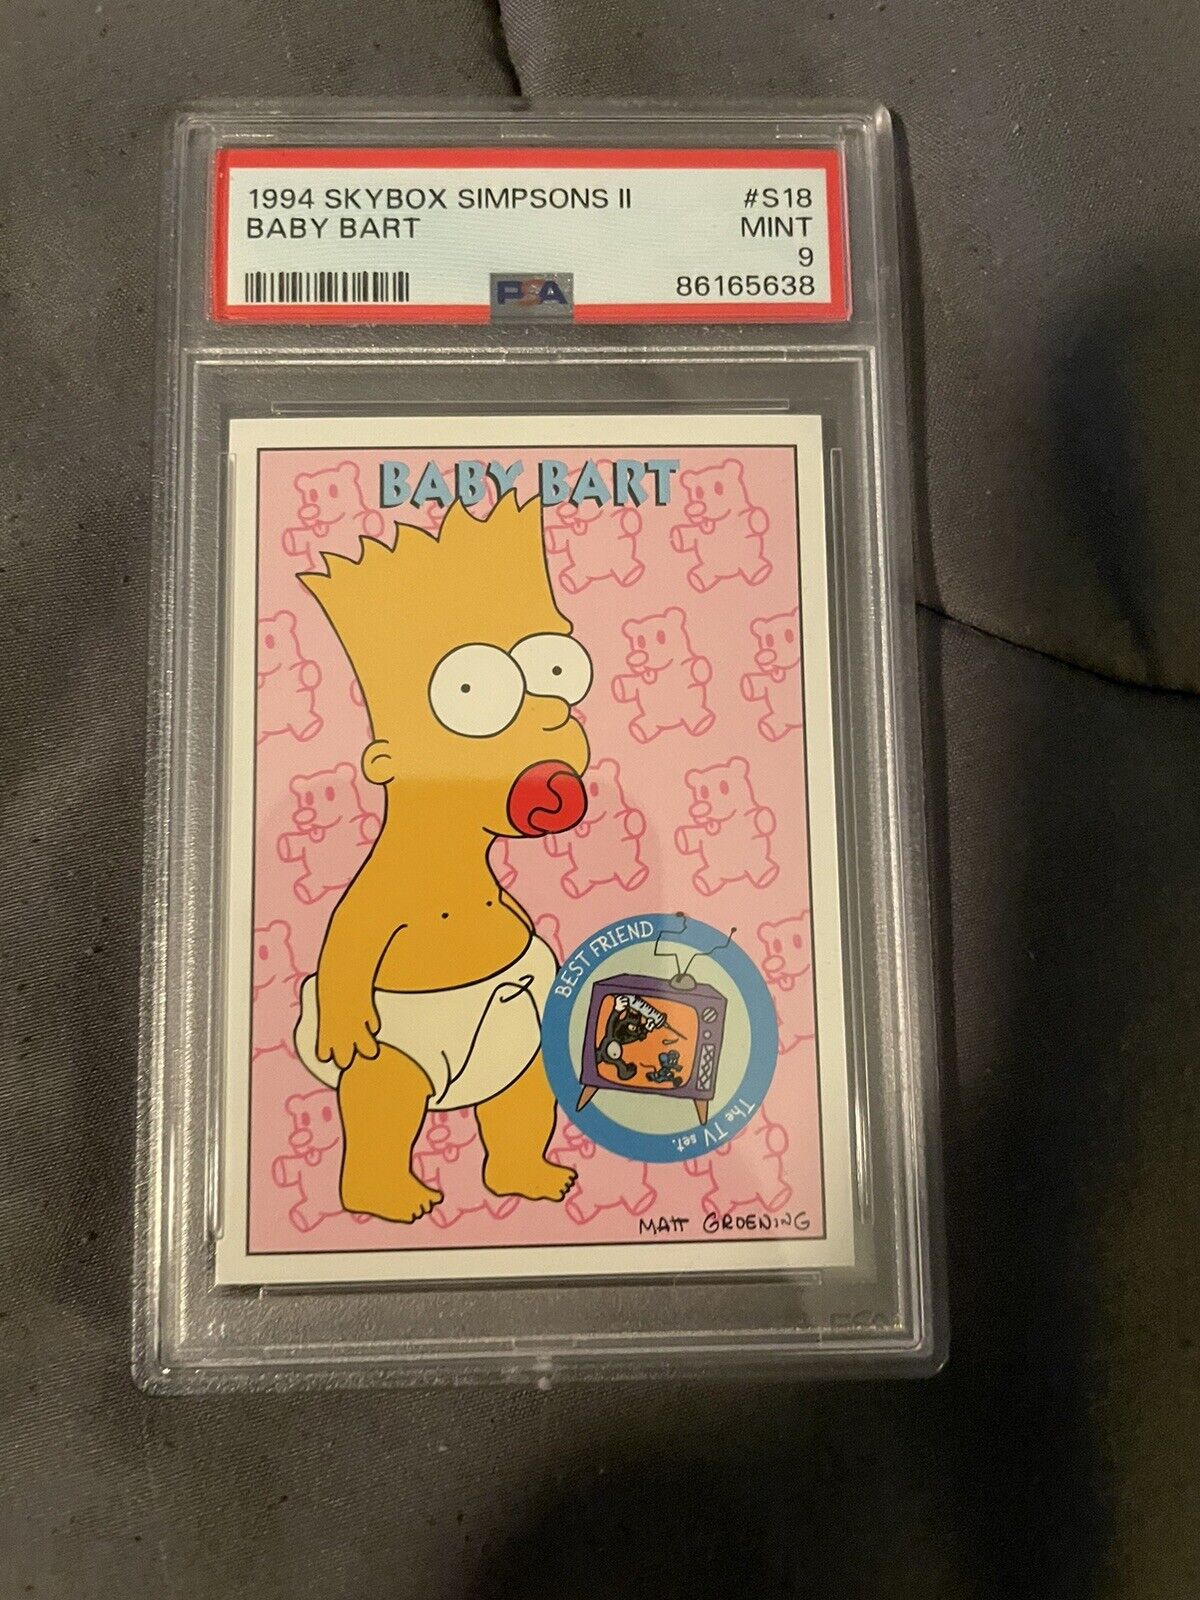 1994 Skybox Simpsons Baby Bart PSA 9